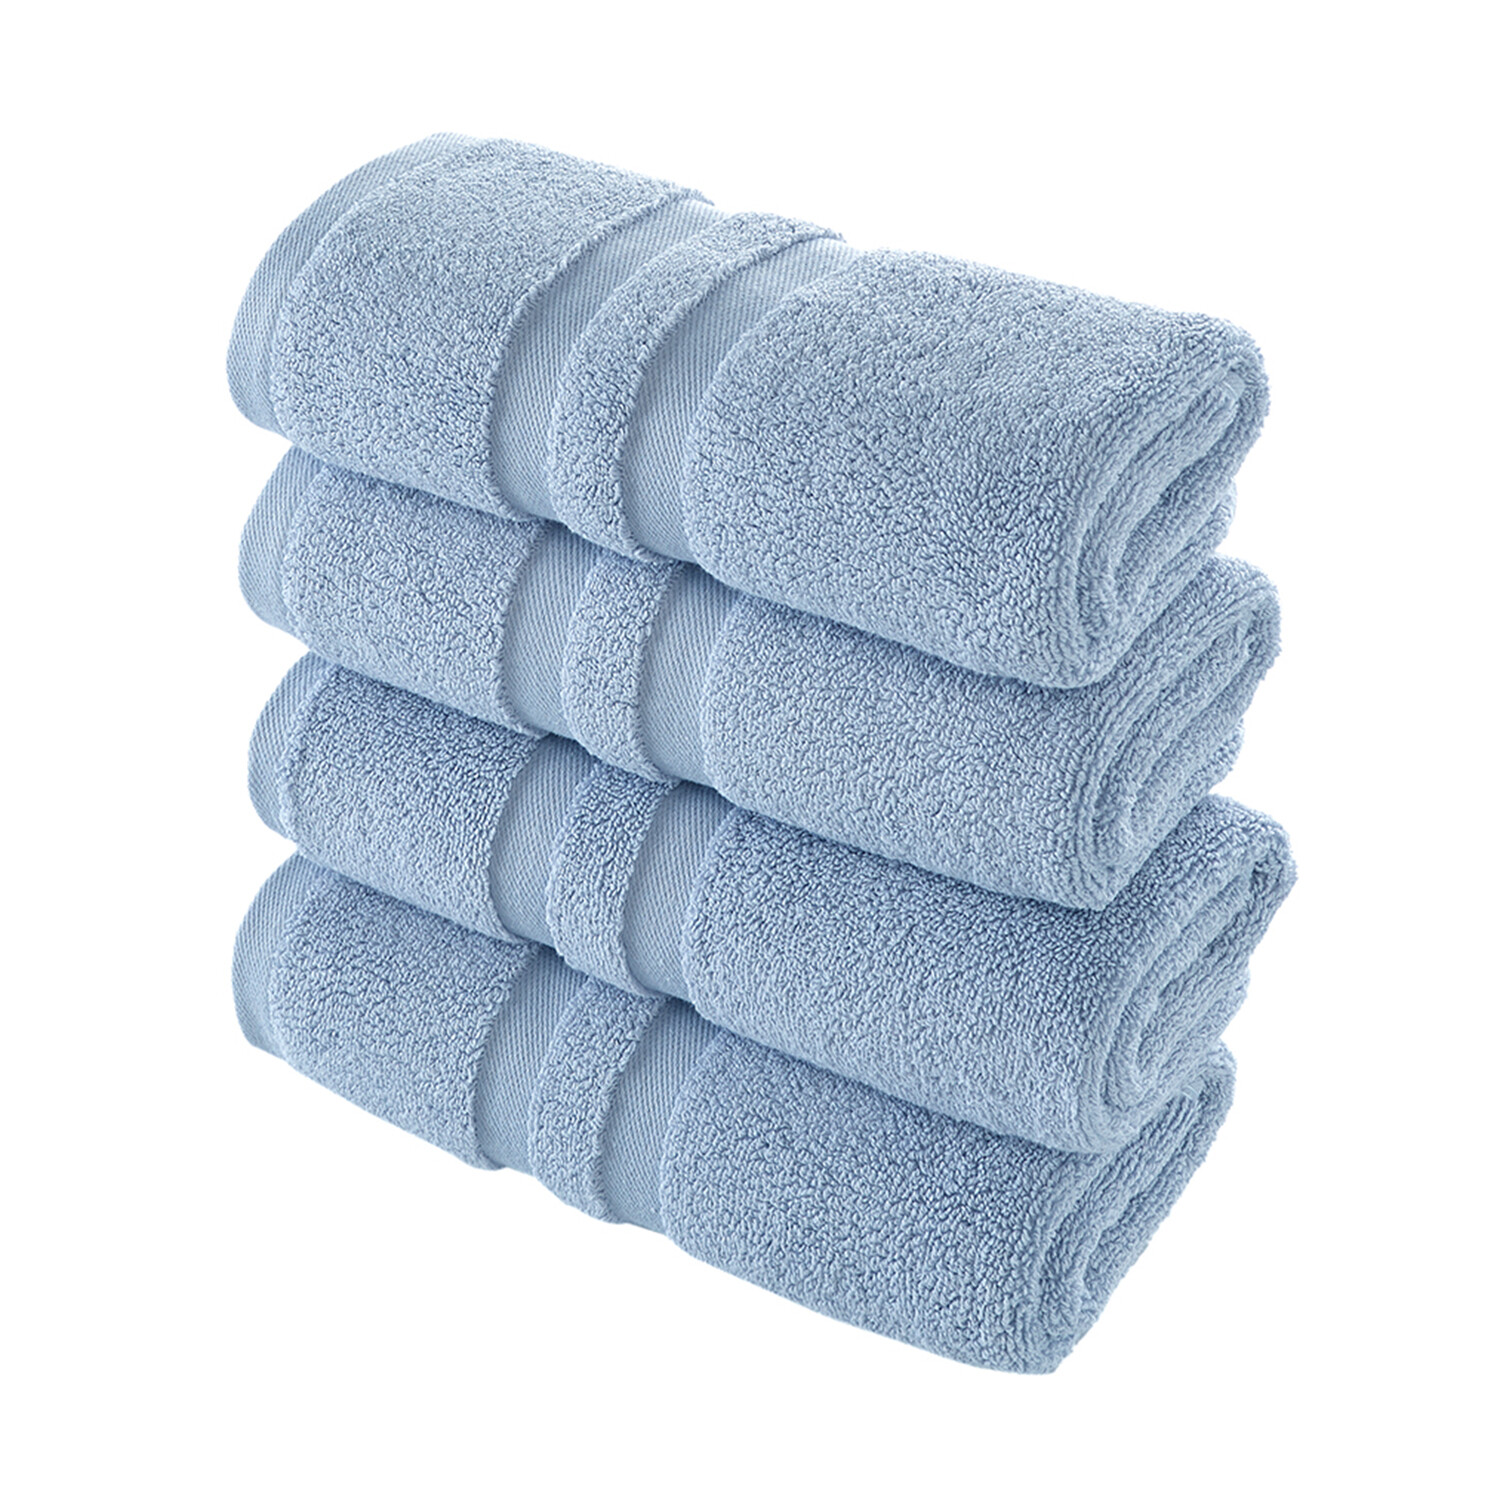 Alexis Antimicrobial Irvington Bath Towel Pack Of 3